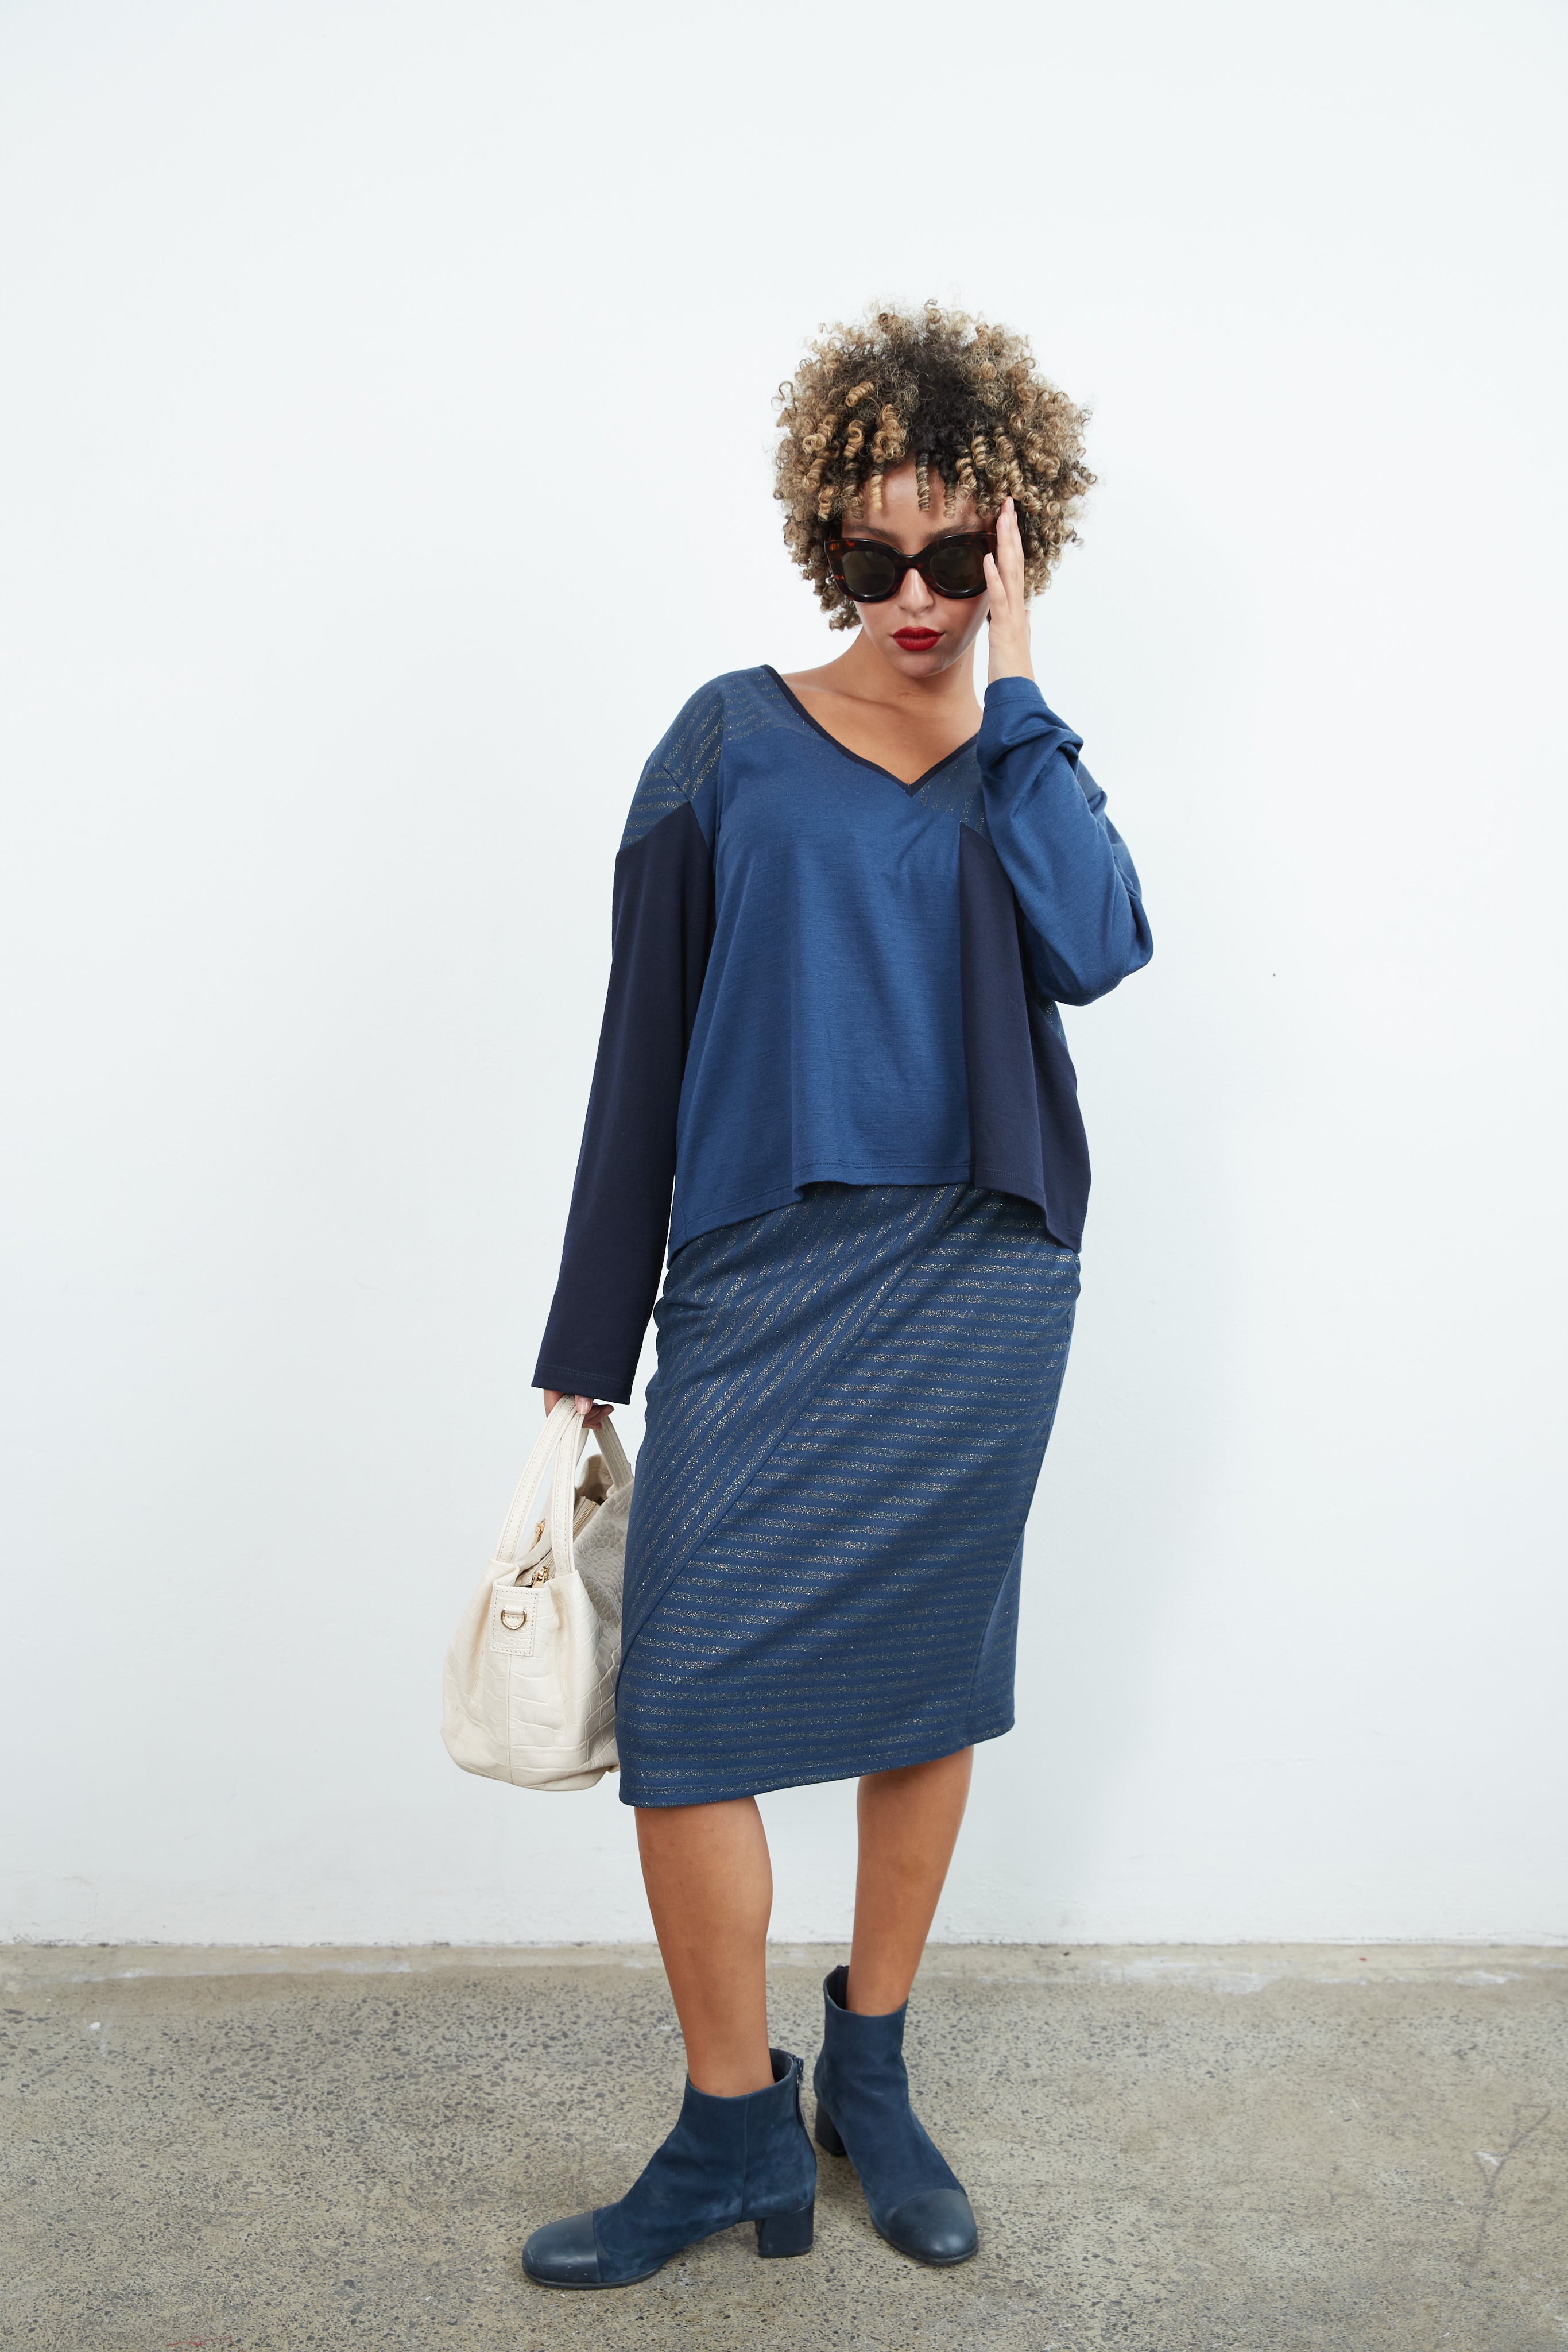 Geo skirt 90%wool 10%lurex stripe, by Sylvia Riley Designs